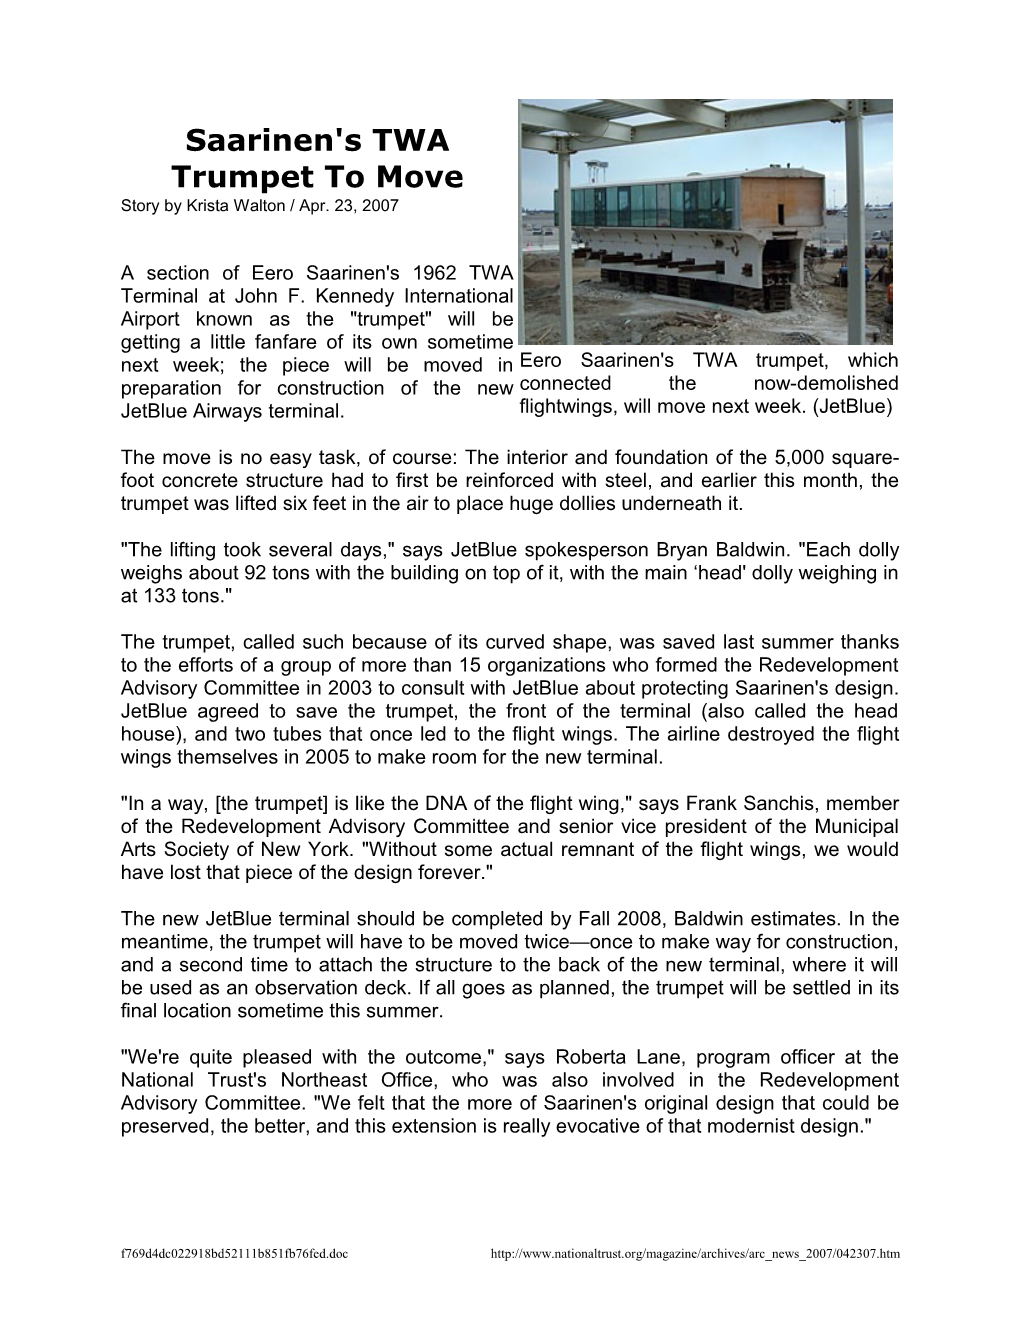 Saarinen's TWA Trumpet to Move